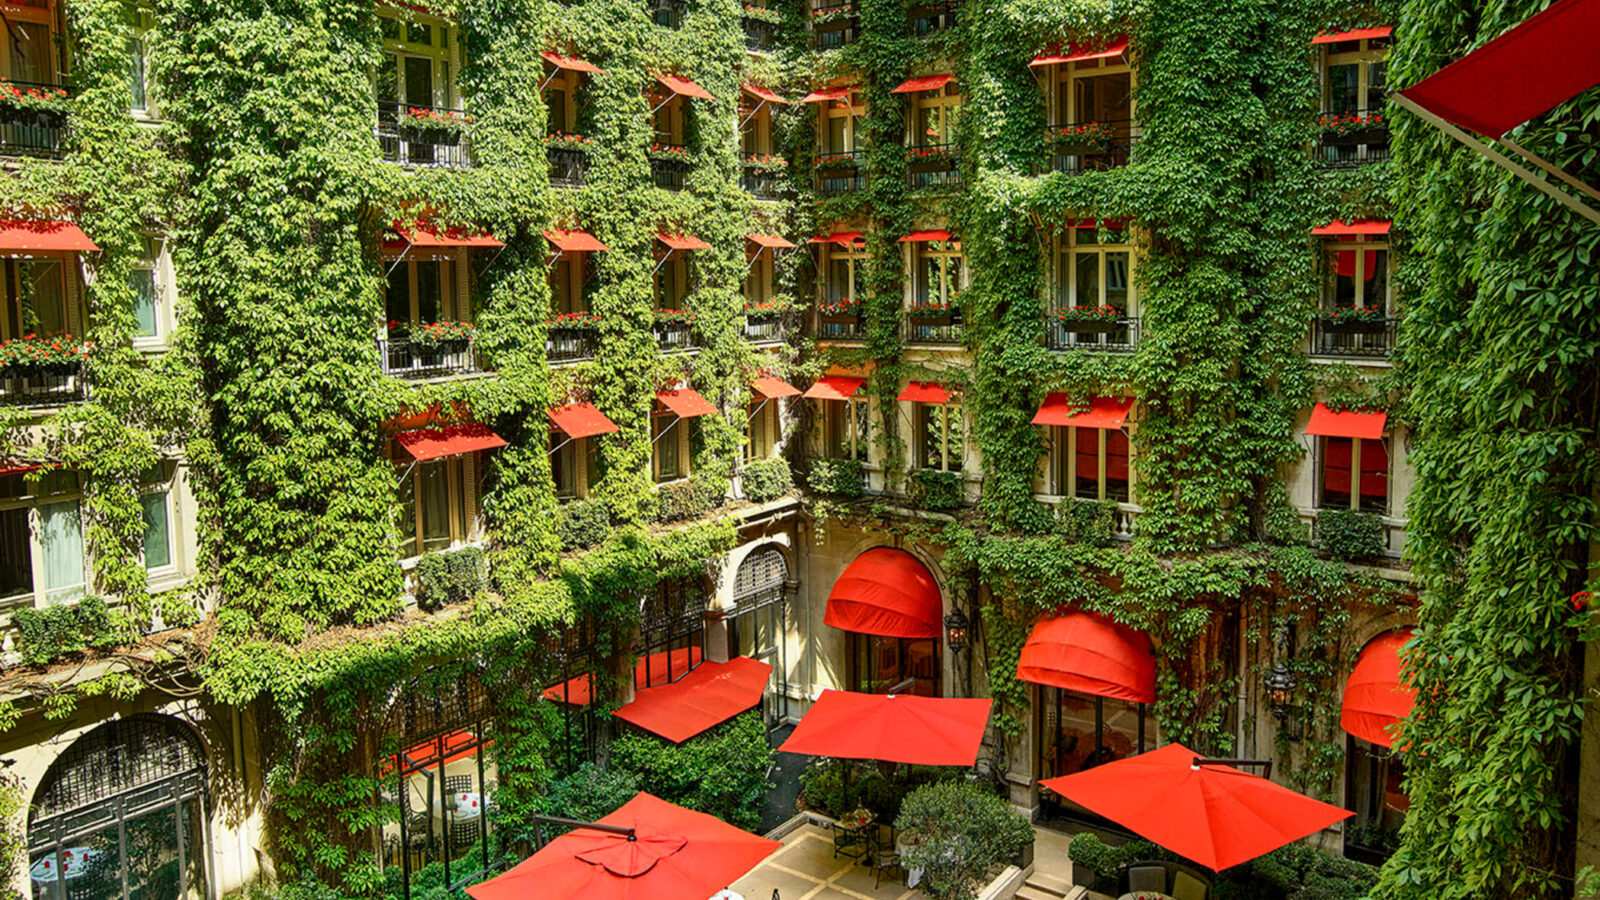 Hotel-Plaza-Athenee-La-Cour-Jardin-Courtyard-Garden